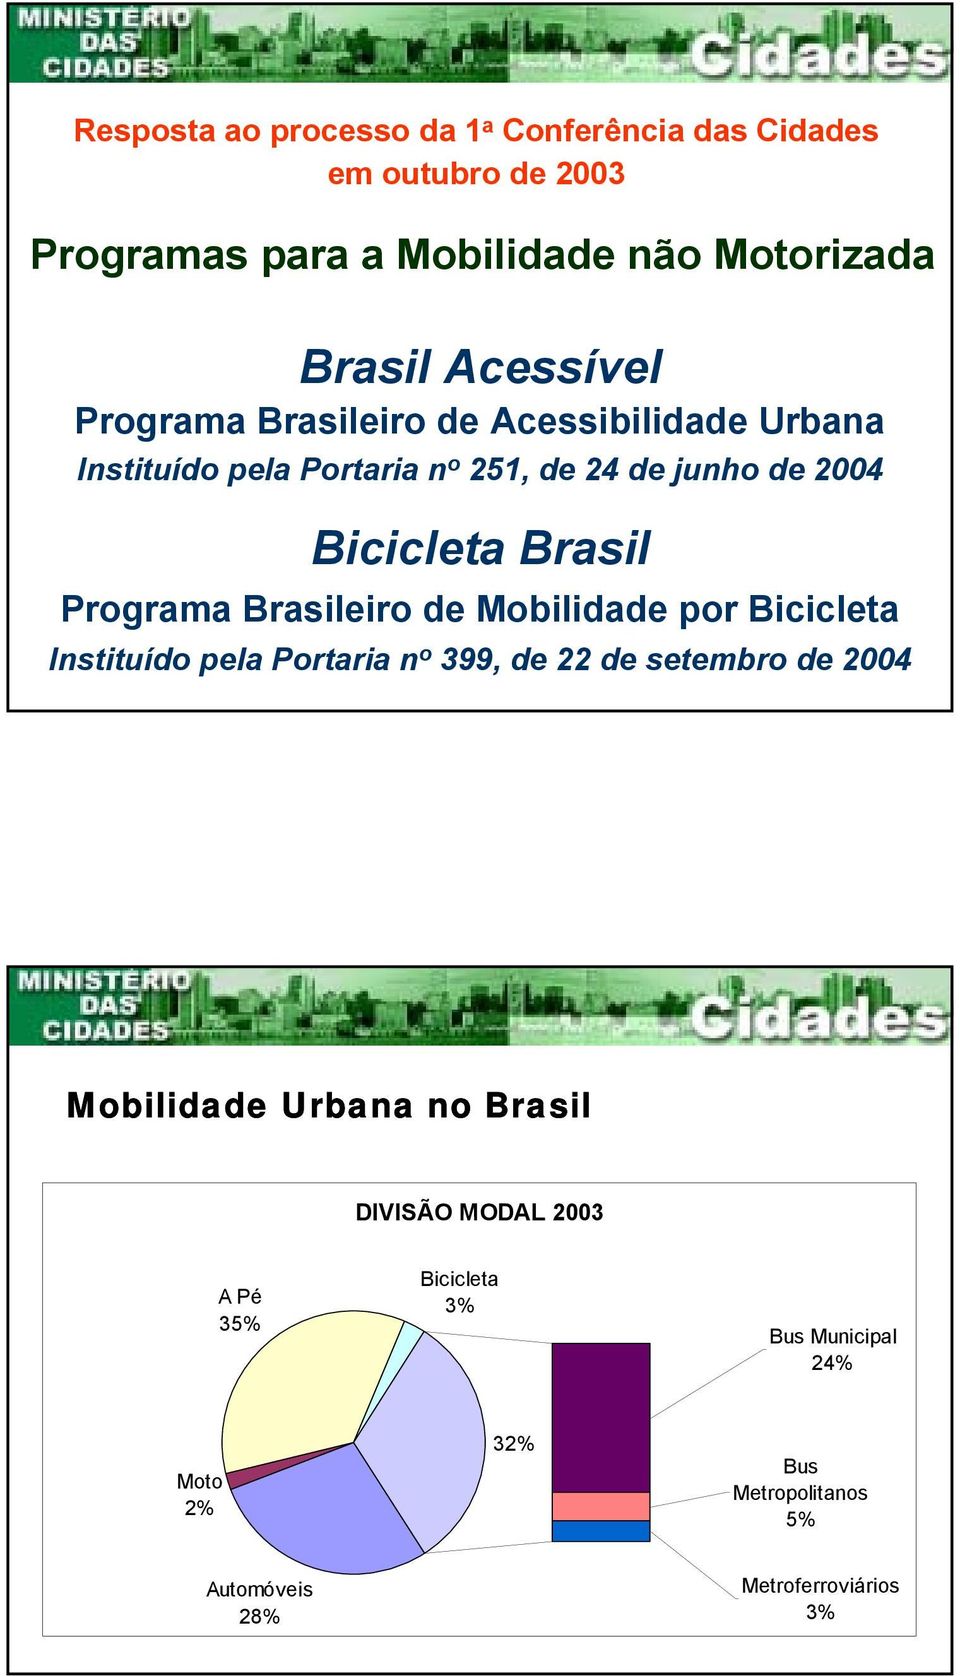 Programa Brasileiro de Mobilidade por Bicicleta Instituído pela Portaria n o 399, de 22 de setembro de 2004 Mobilidade Urbana no